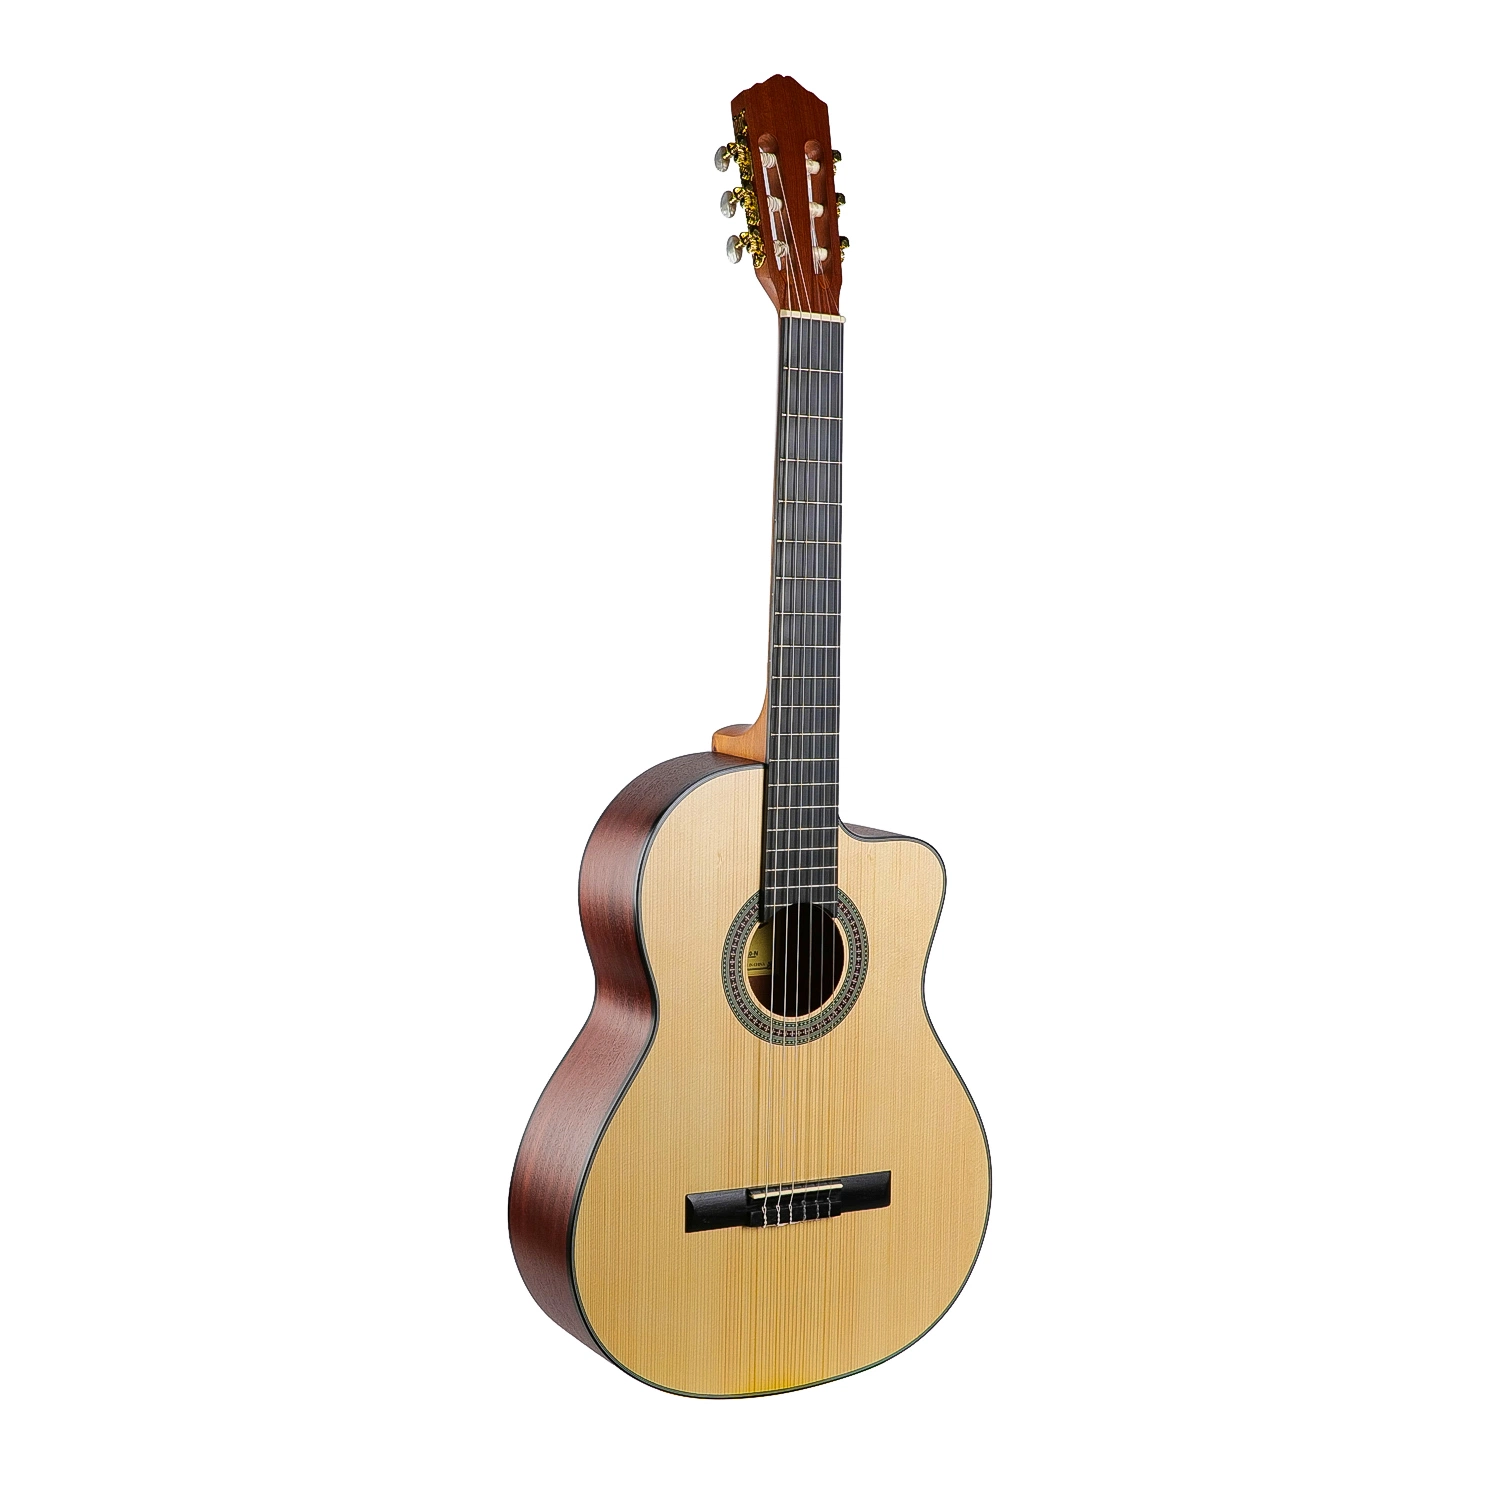 Cgm-10 Great Value Classical Guitar Model, Spruce Top with Sapele B&S. Hot Sale in EU Market